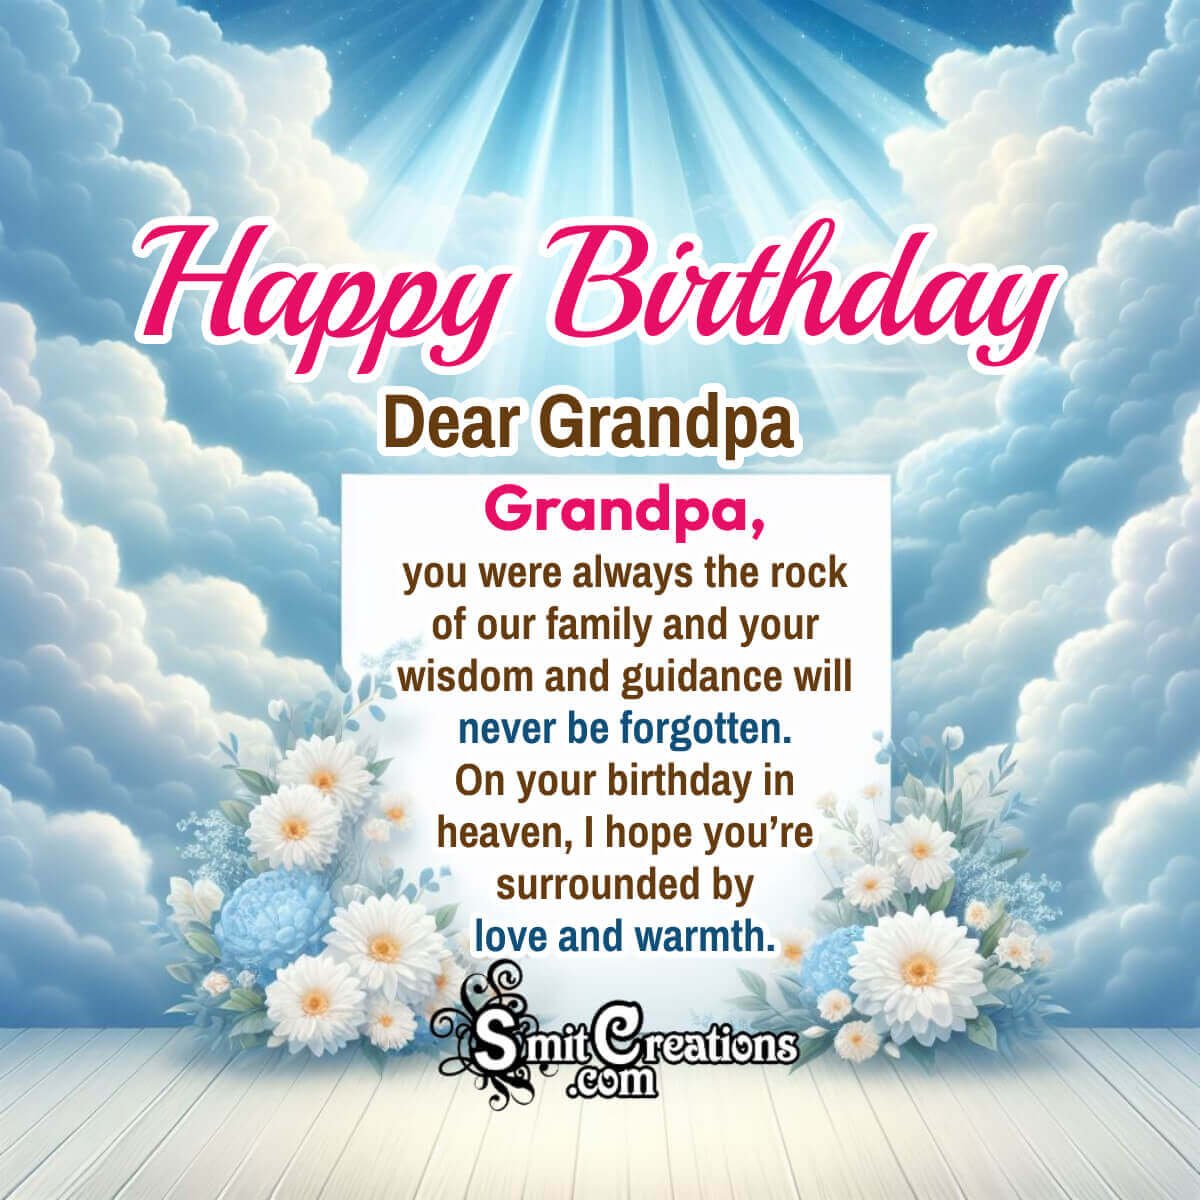 Heavenly Birthday Wishing Photo For Grandma